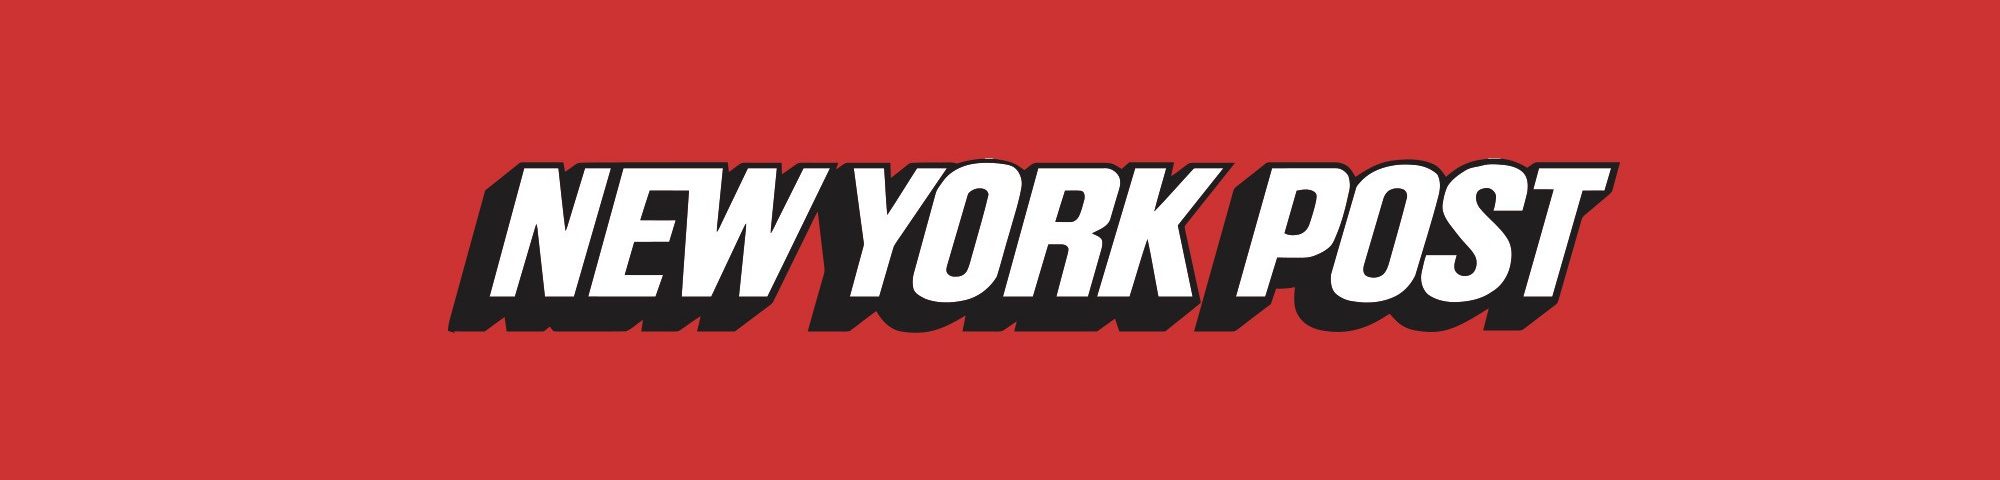 New york post Logos